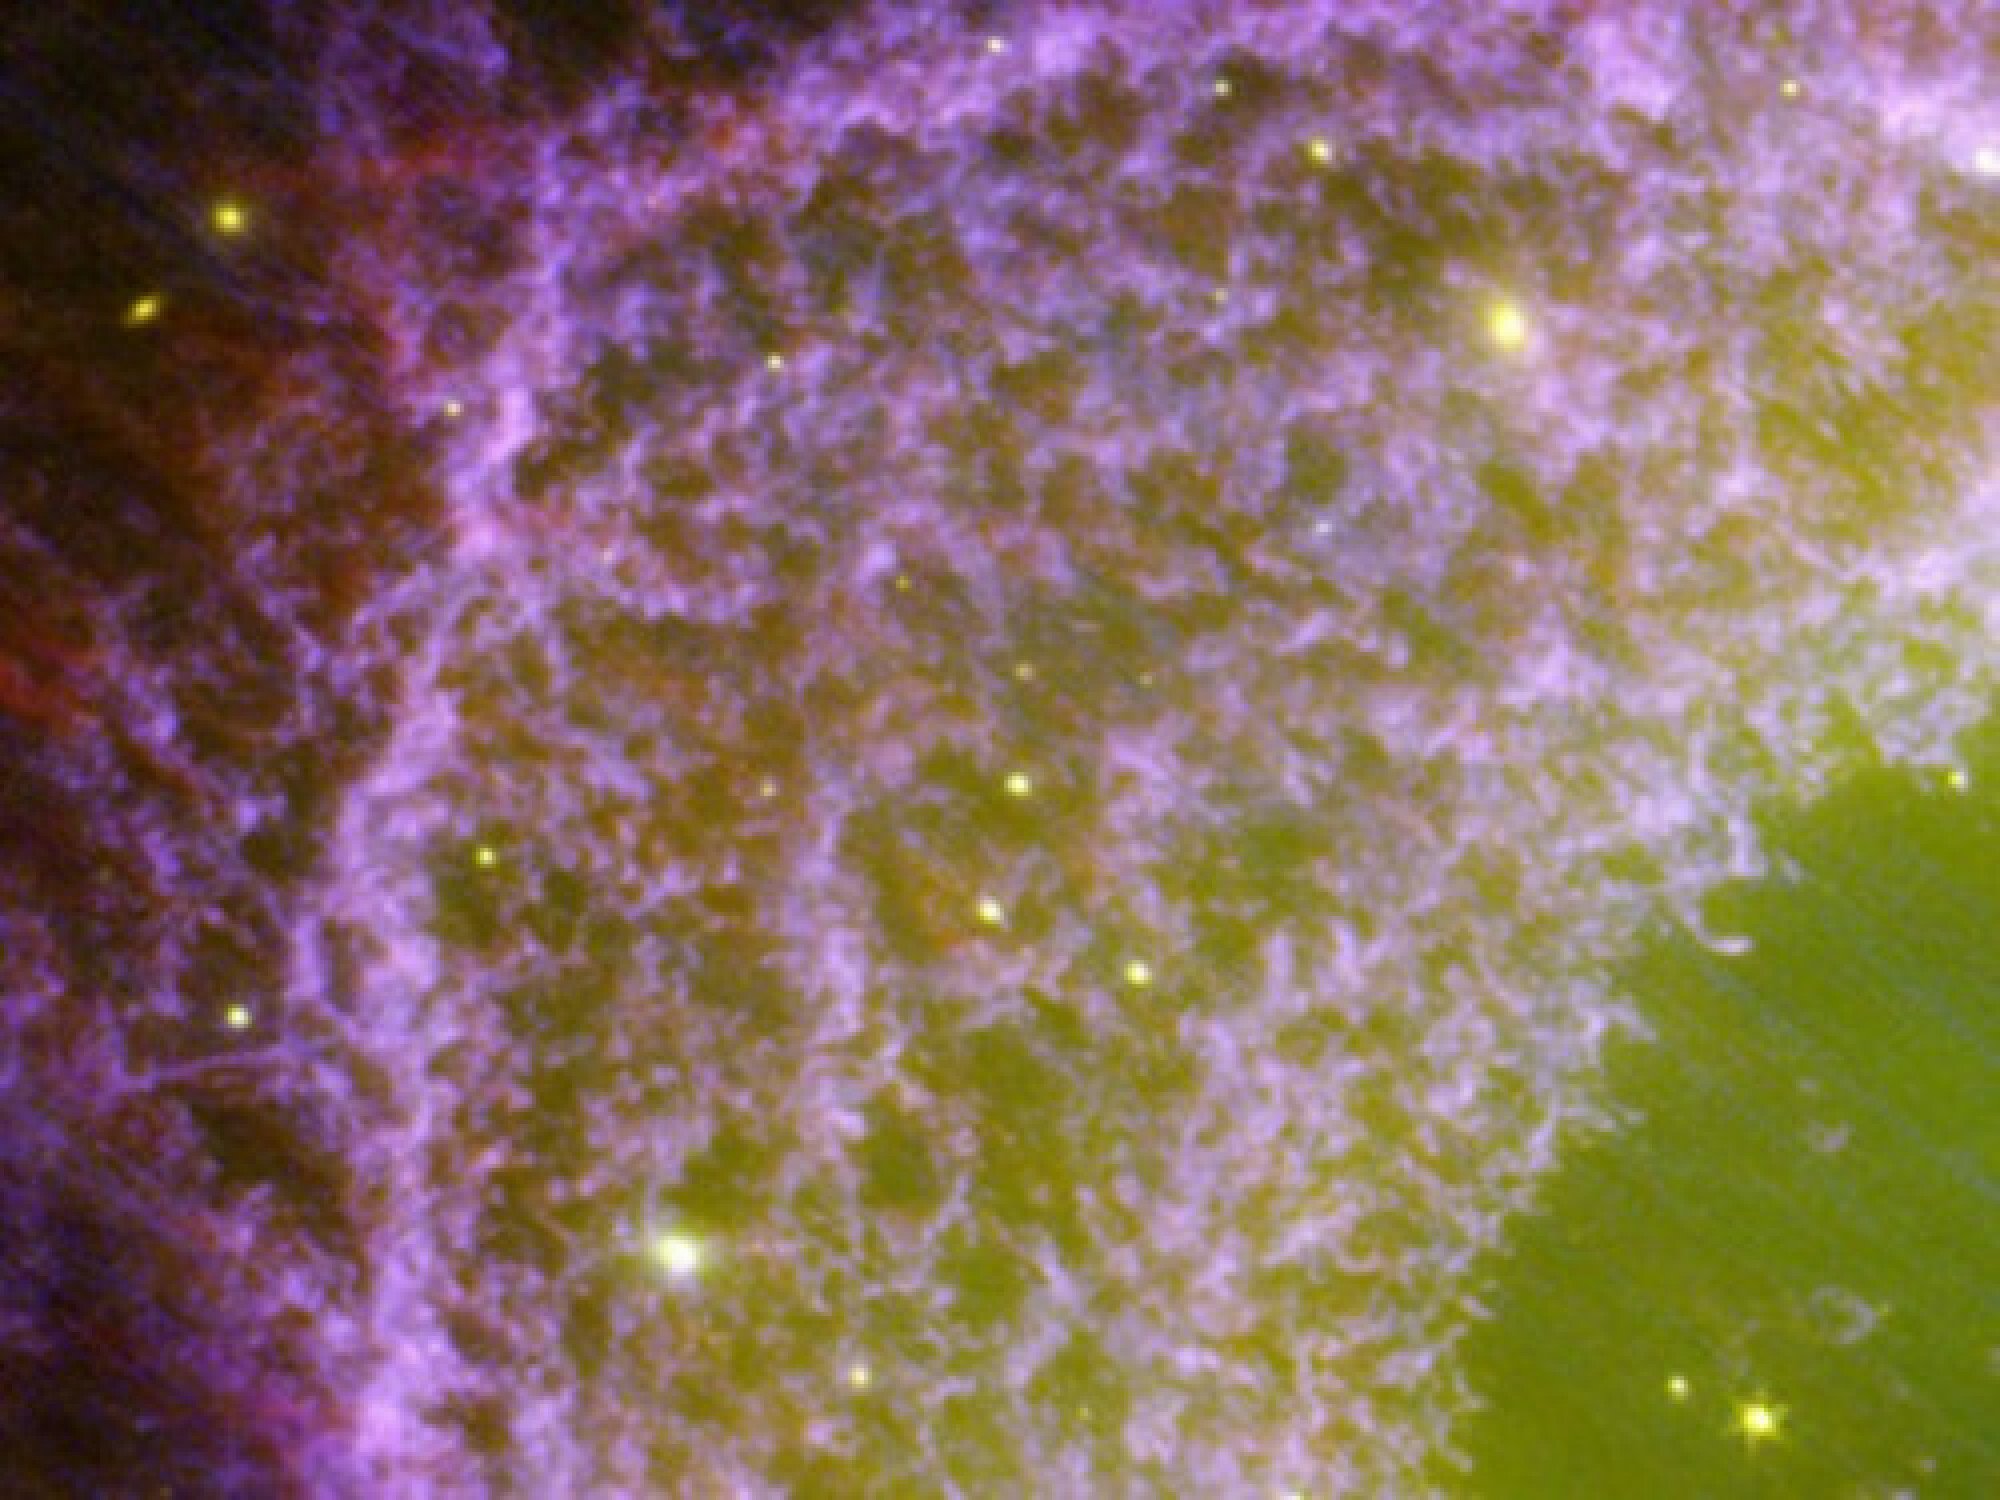 Observing Ring Nebula